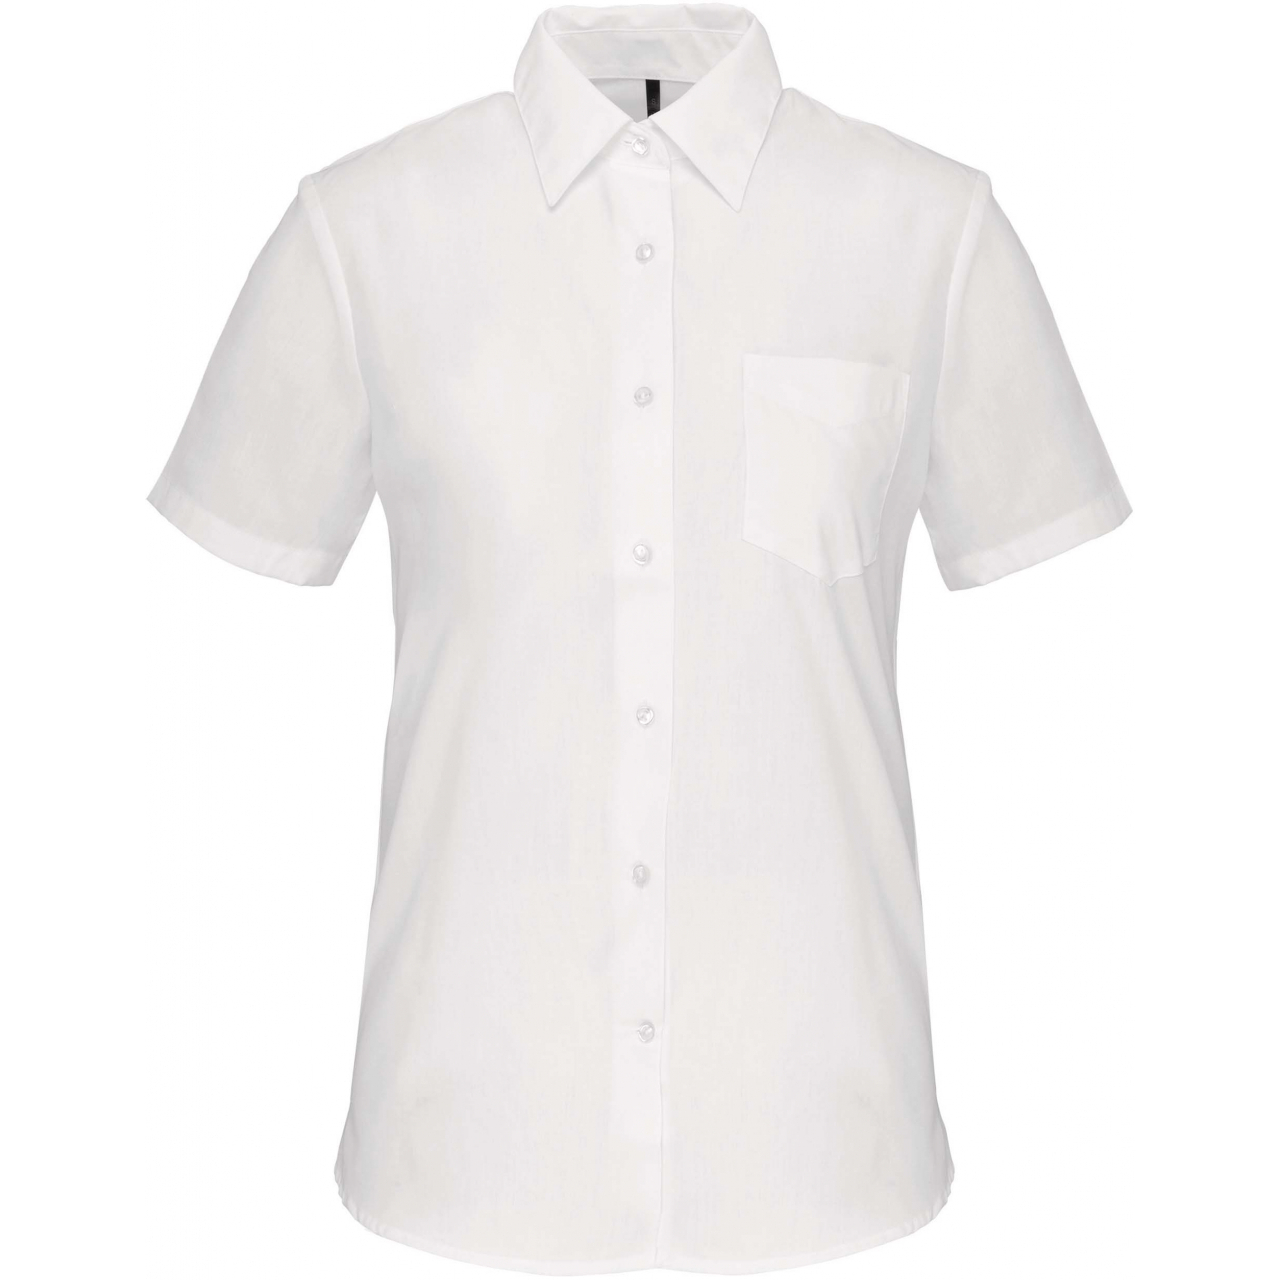 Košile dámská s krátkým rukávem Kariban Judith - bílá, XL